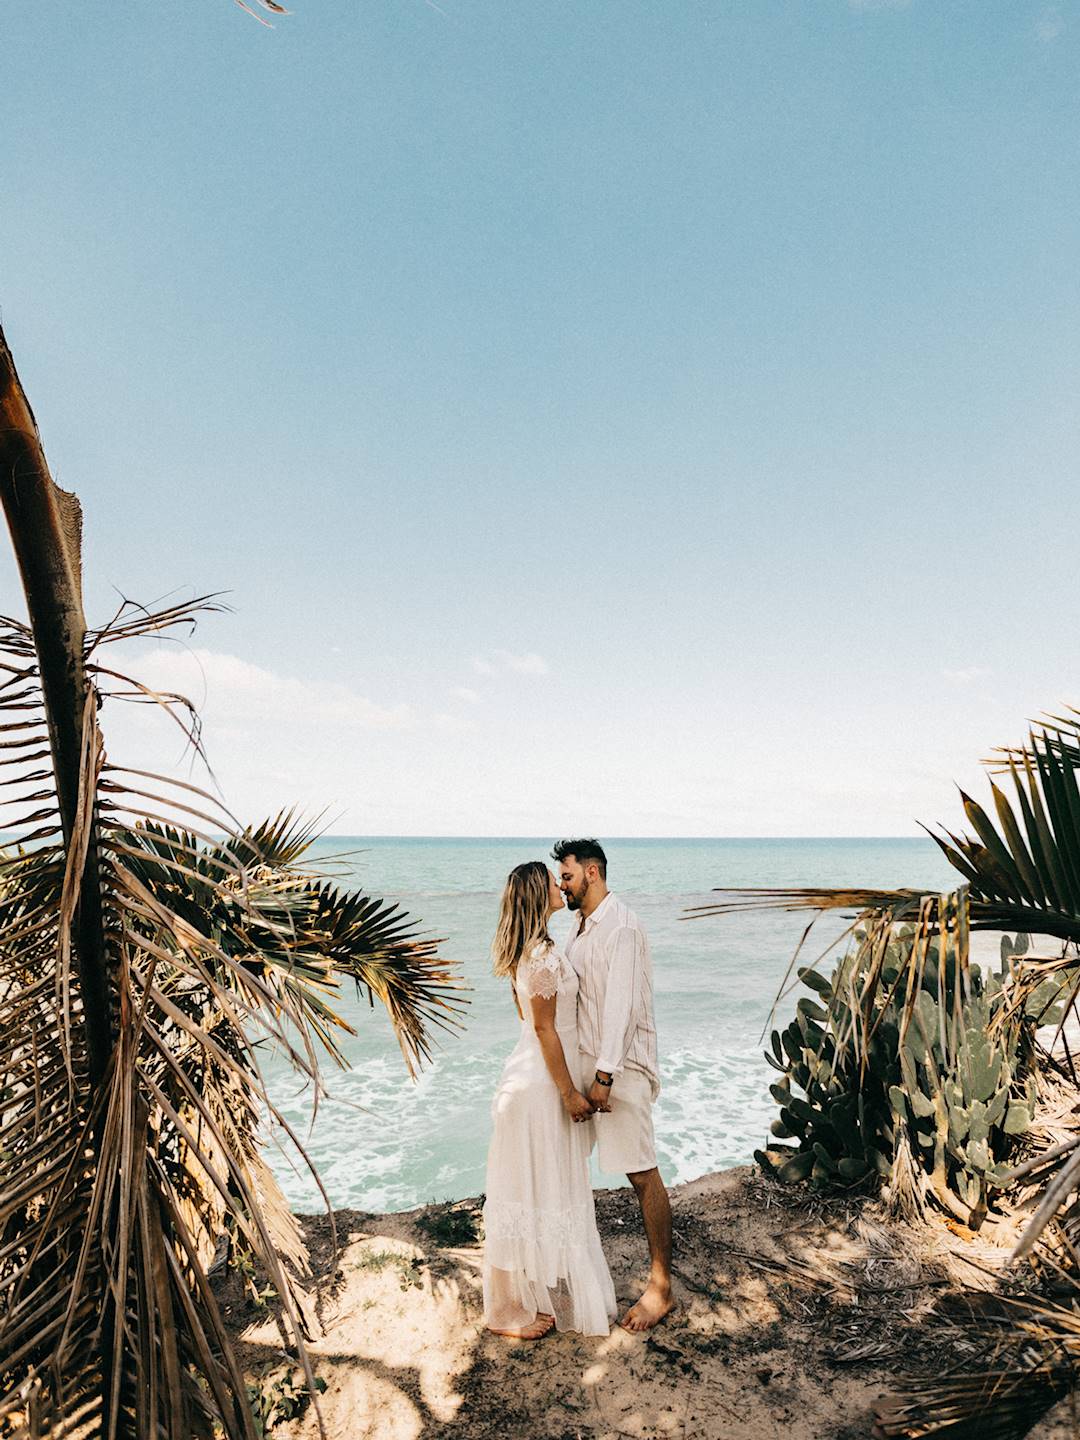 casual beach wedding dresses